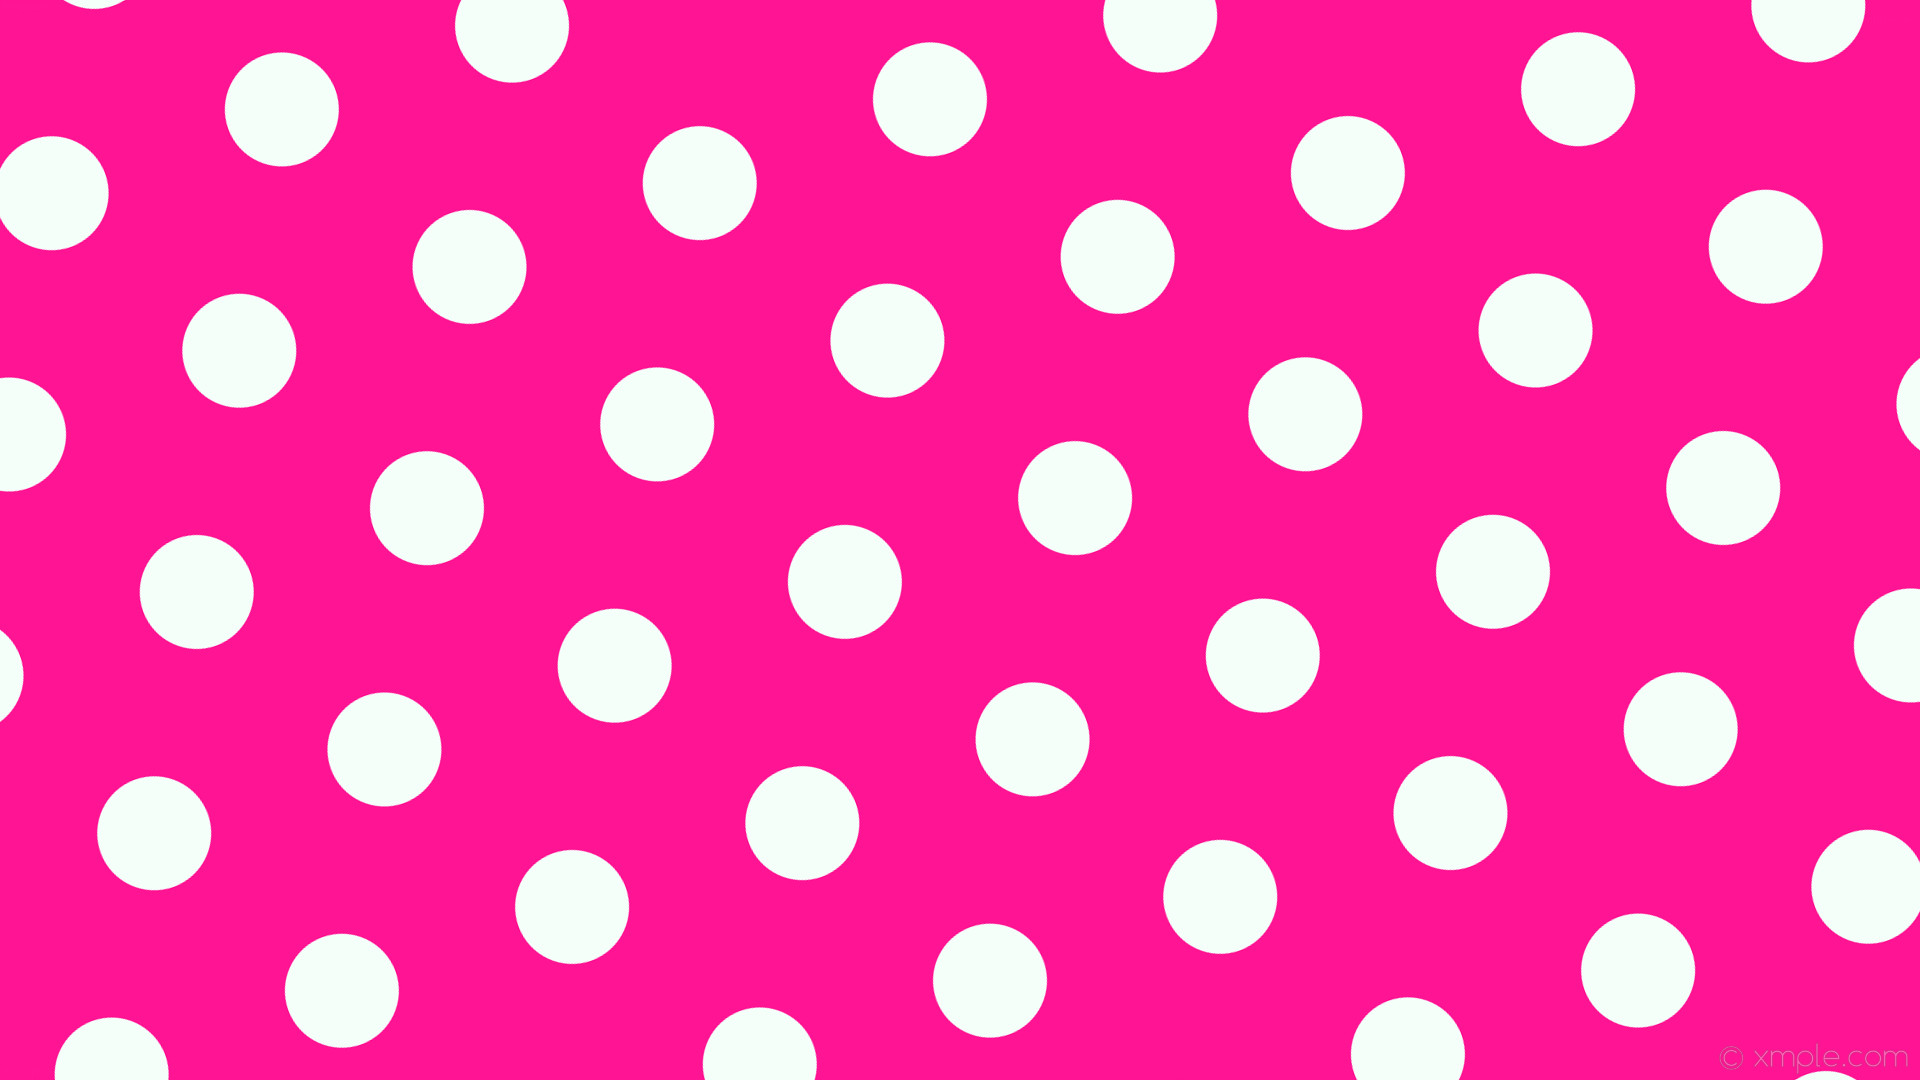 6. Polka Dot Black, White, and Hot Pink Nail Design - wide 6